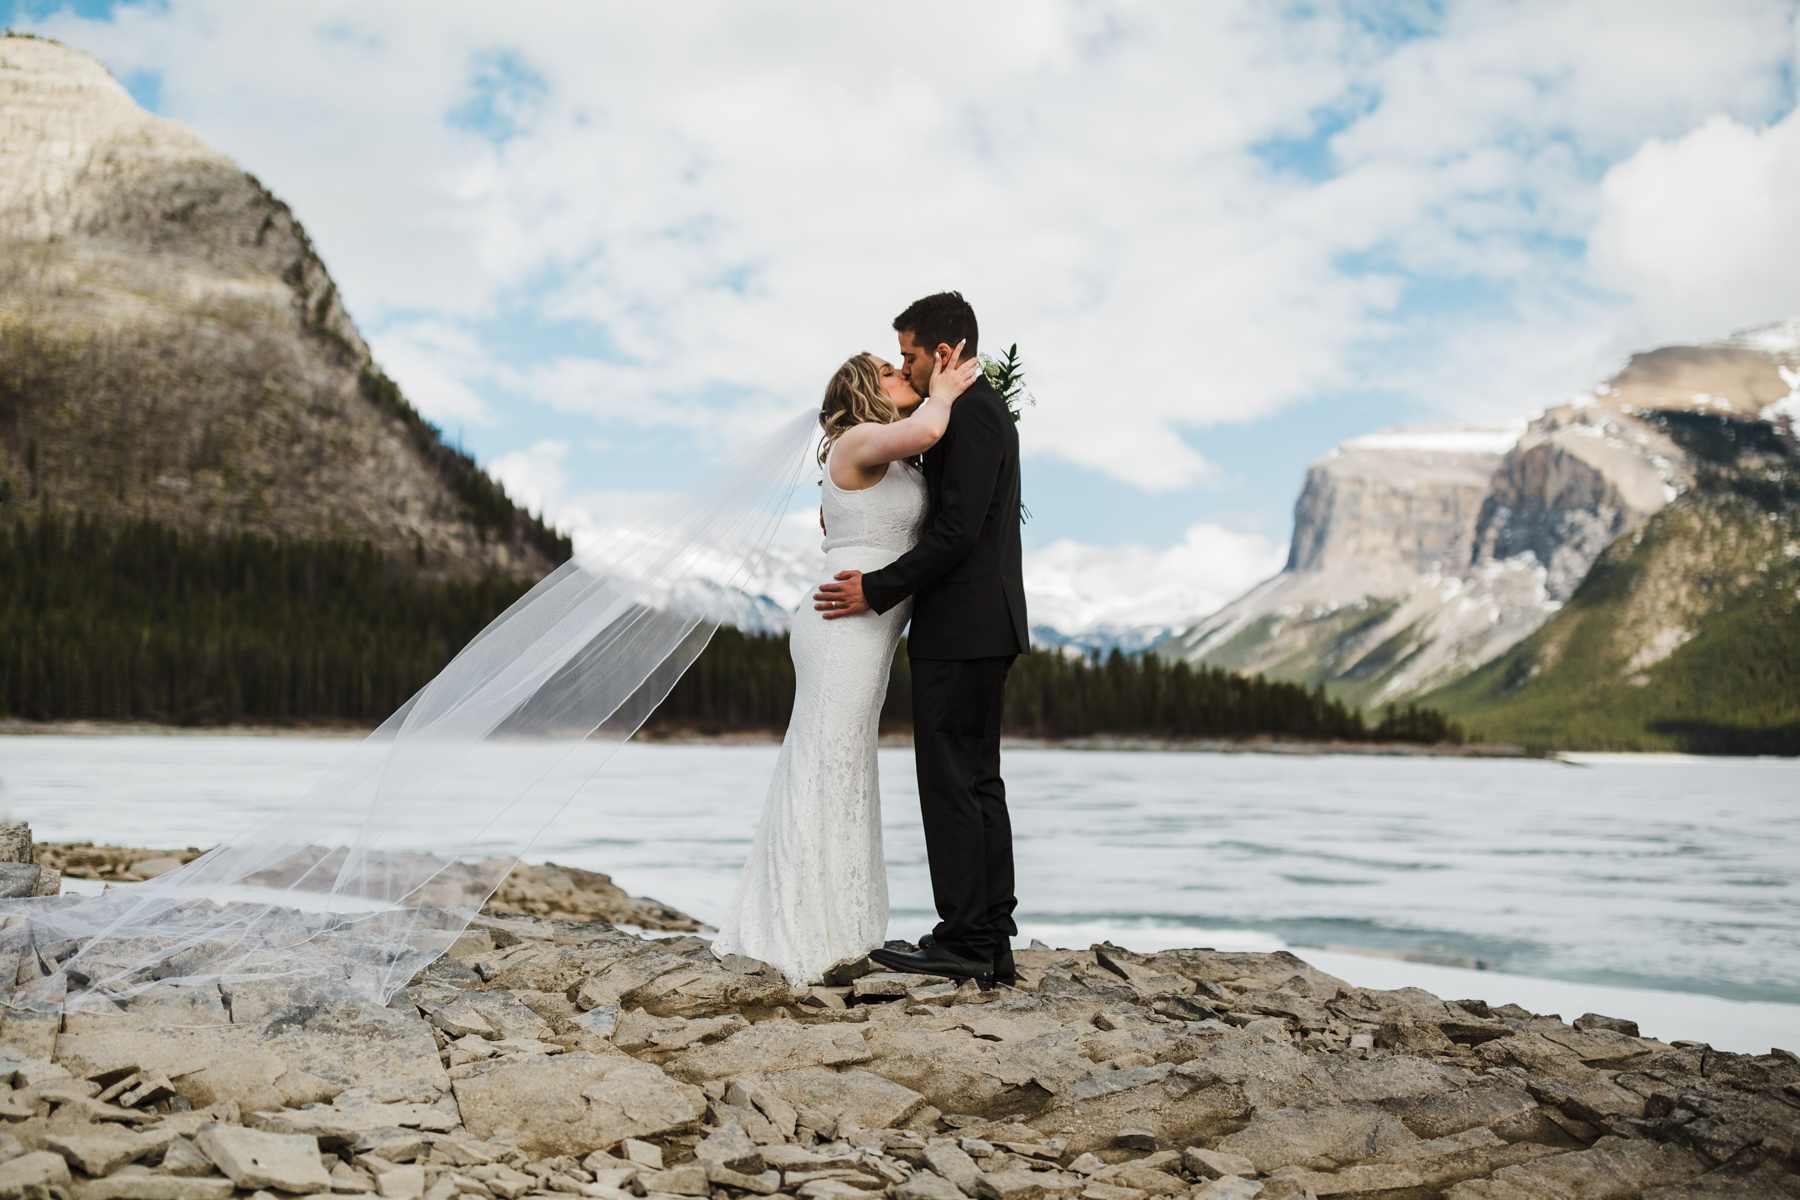 Banff Adventure Wedding Photographers for Lake Minnewanka Elopement - Image 11